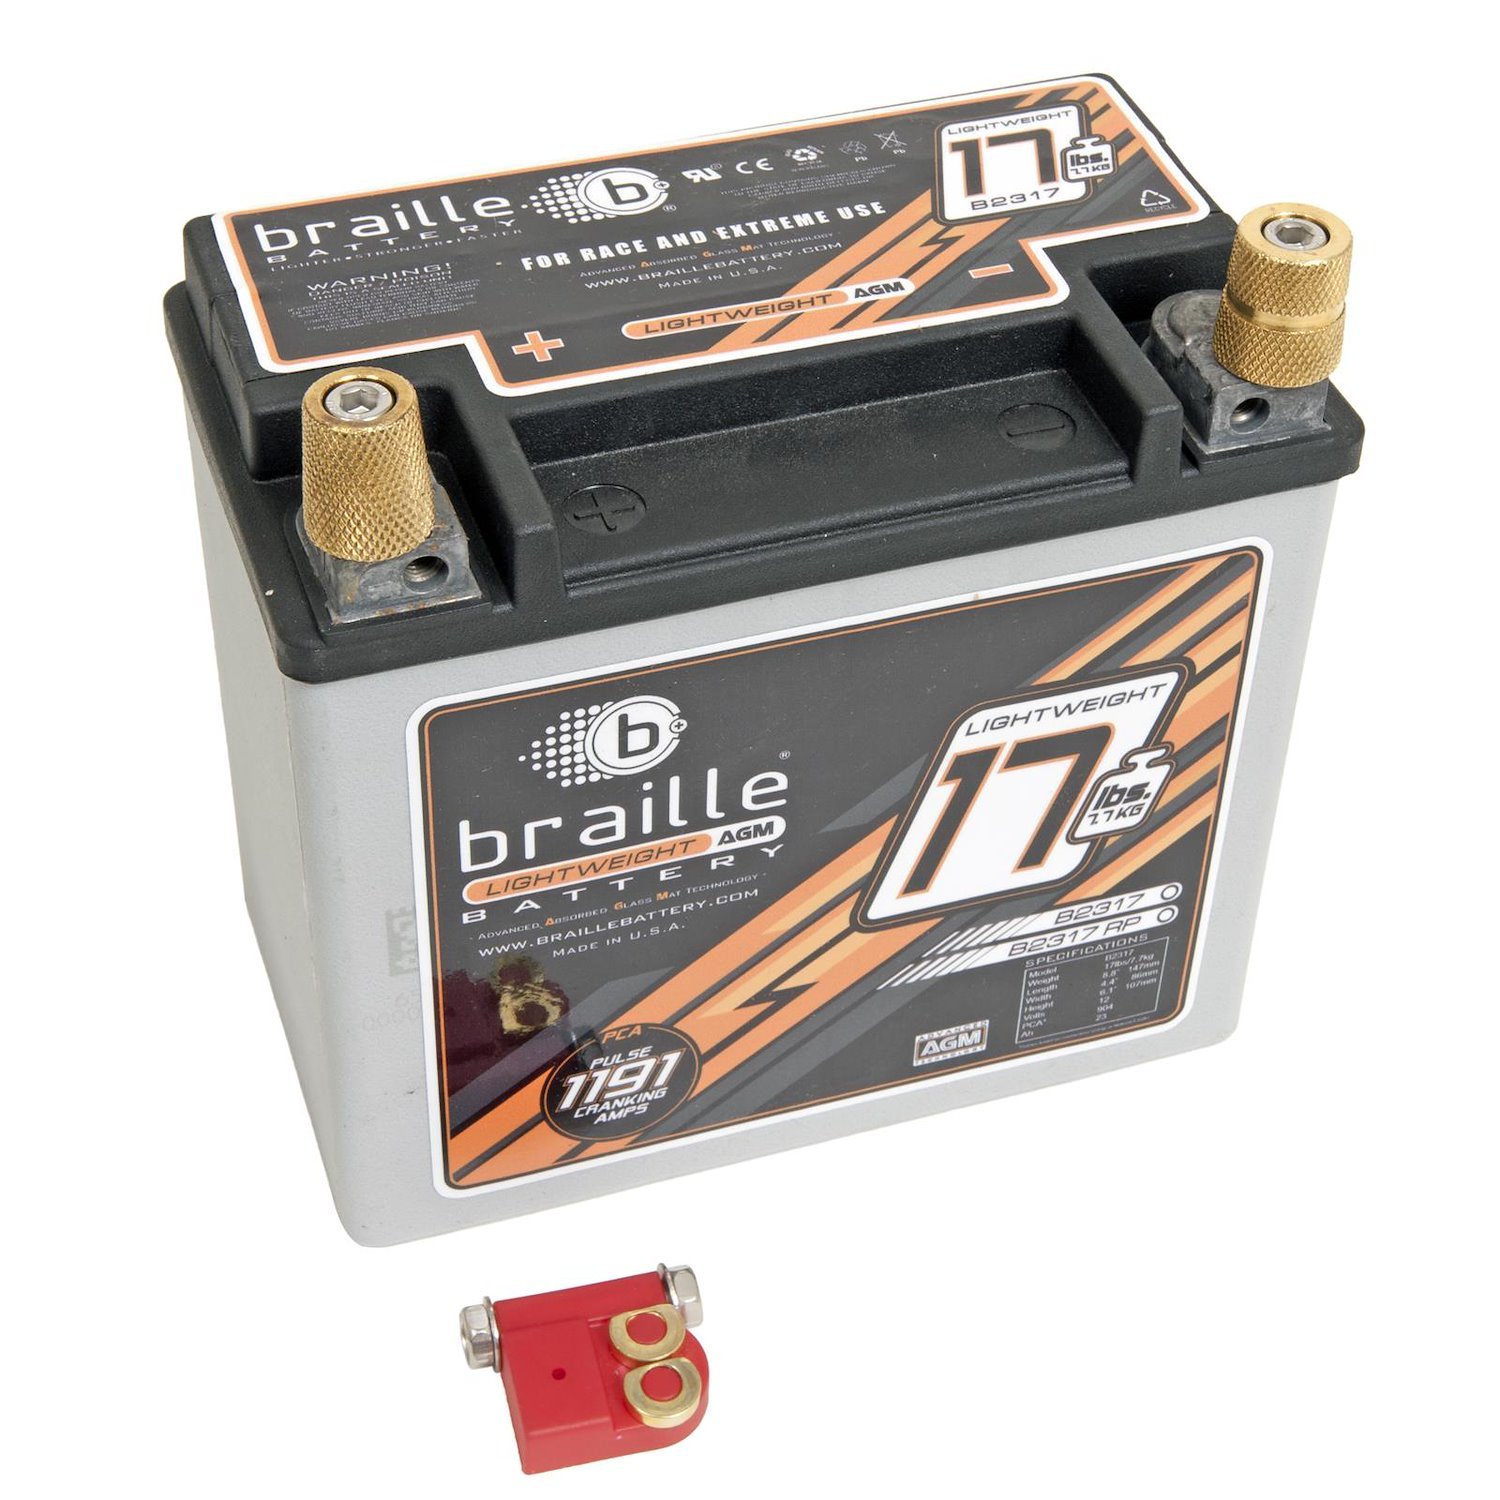 Advanced AGM Lightweight Racing Battery 17 lbs